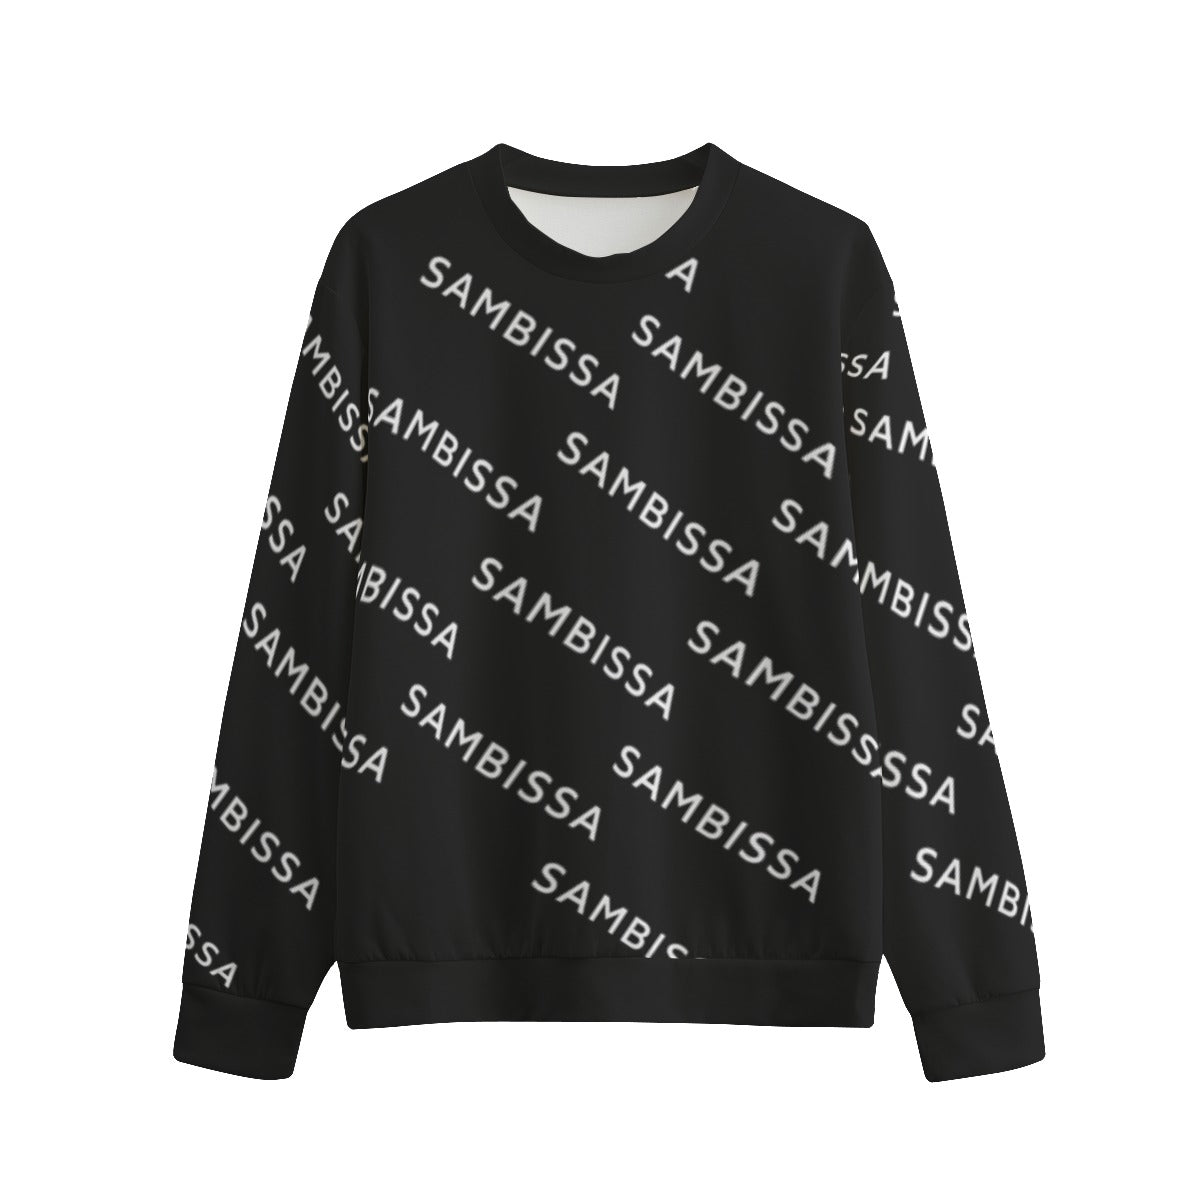 Sambissa Sleeve Sweatshirt All-Over logo